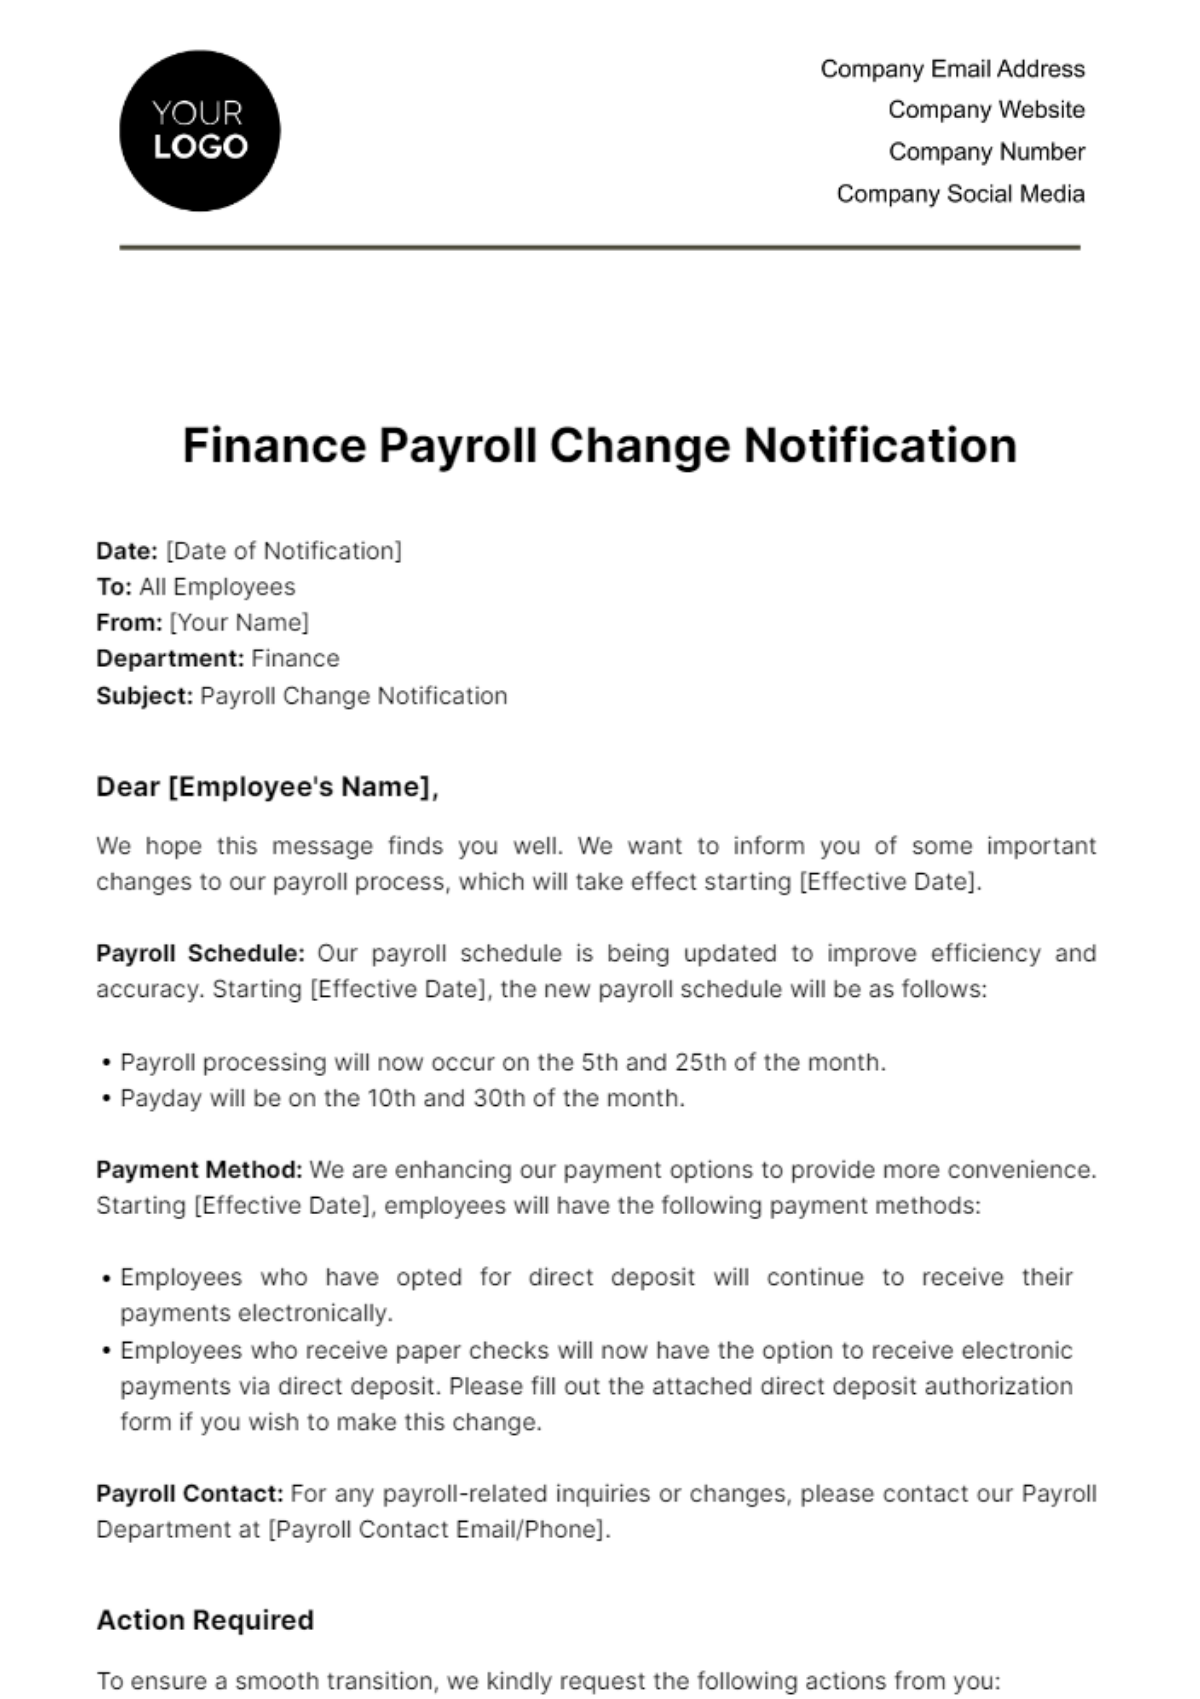 Finance Payroll Change Notification Template